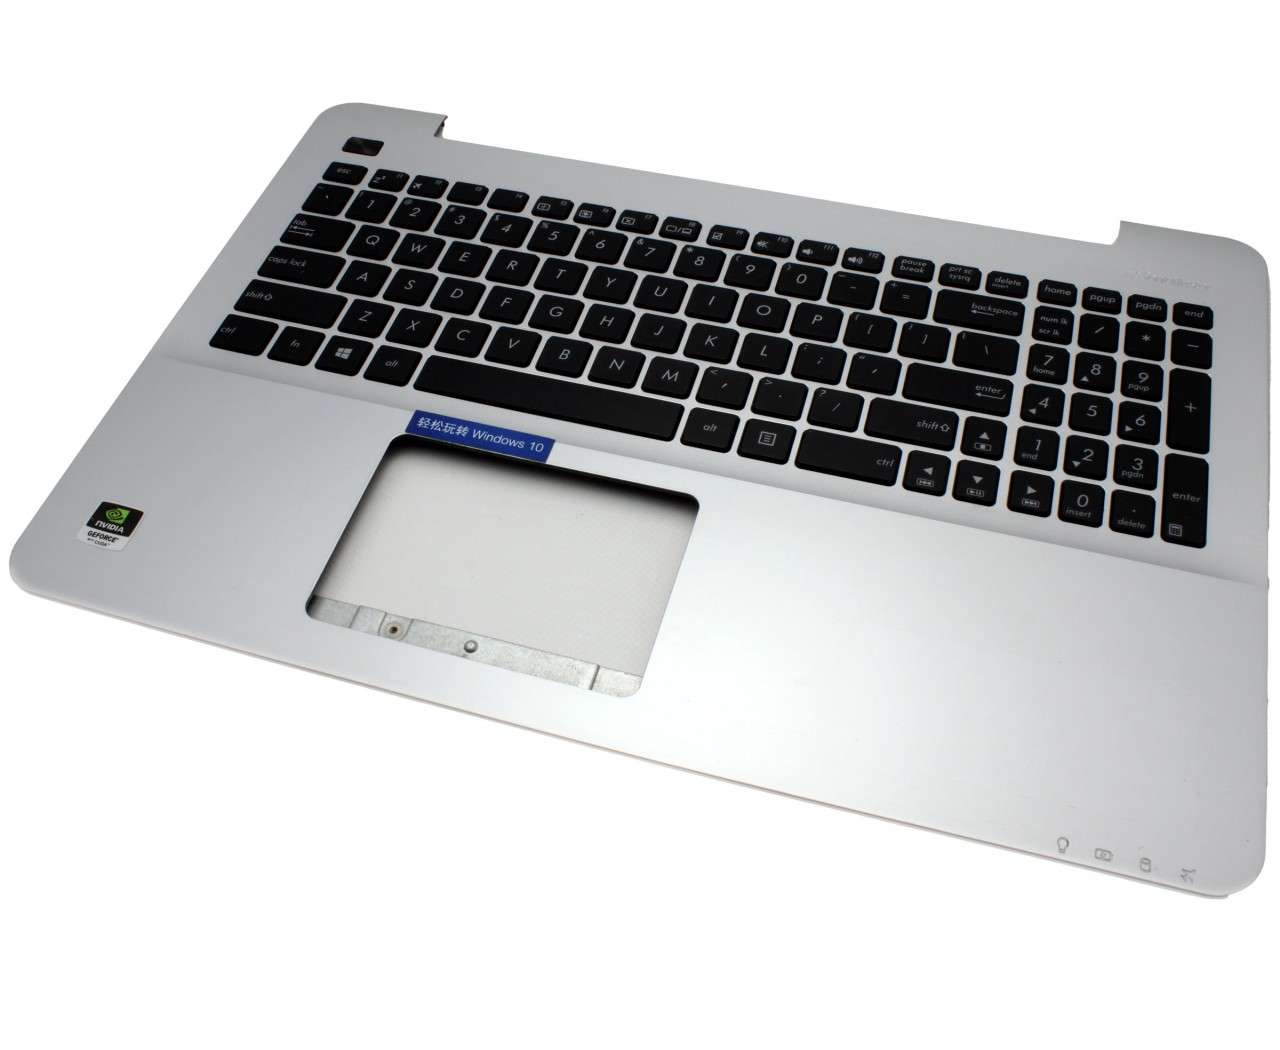 Tastatura Asus 0KNB0-612RUS00 Neagra cu Palmrest argintiu